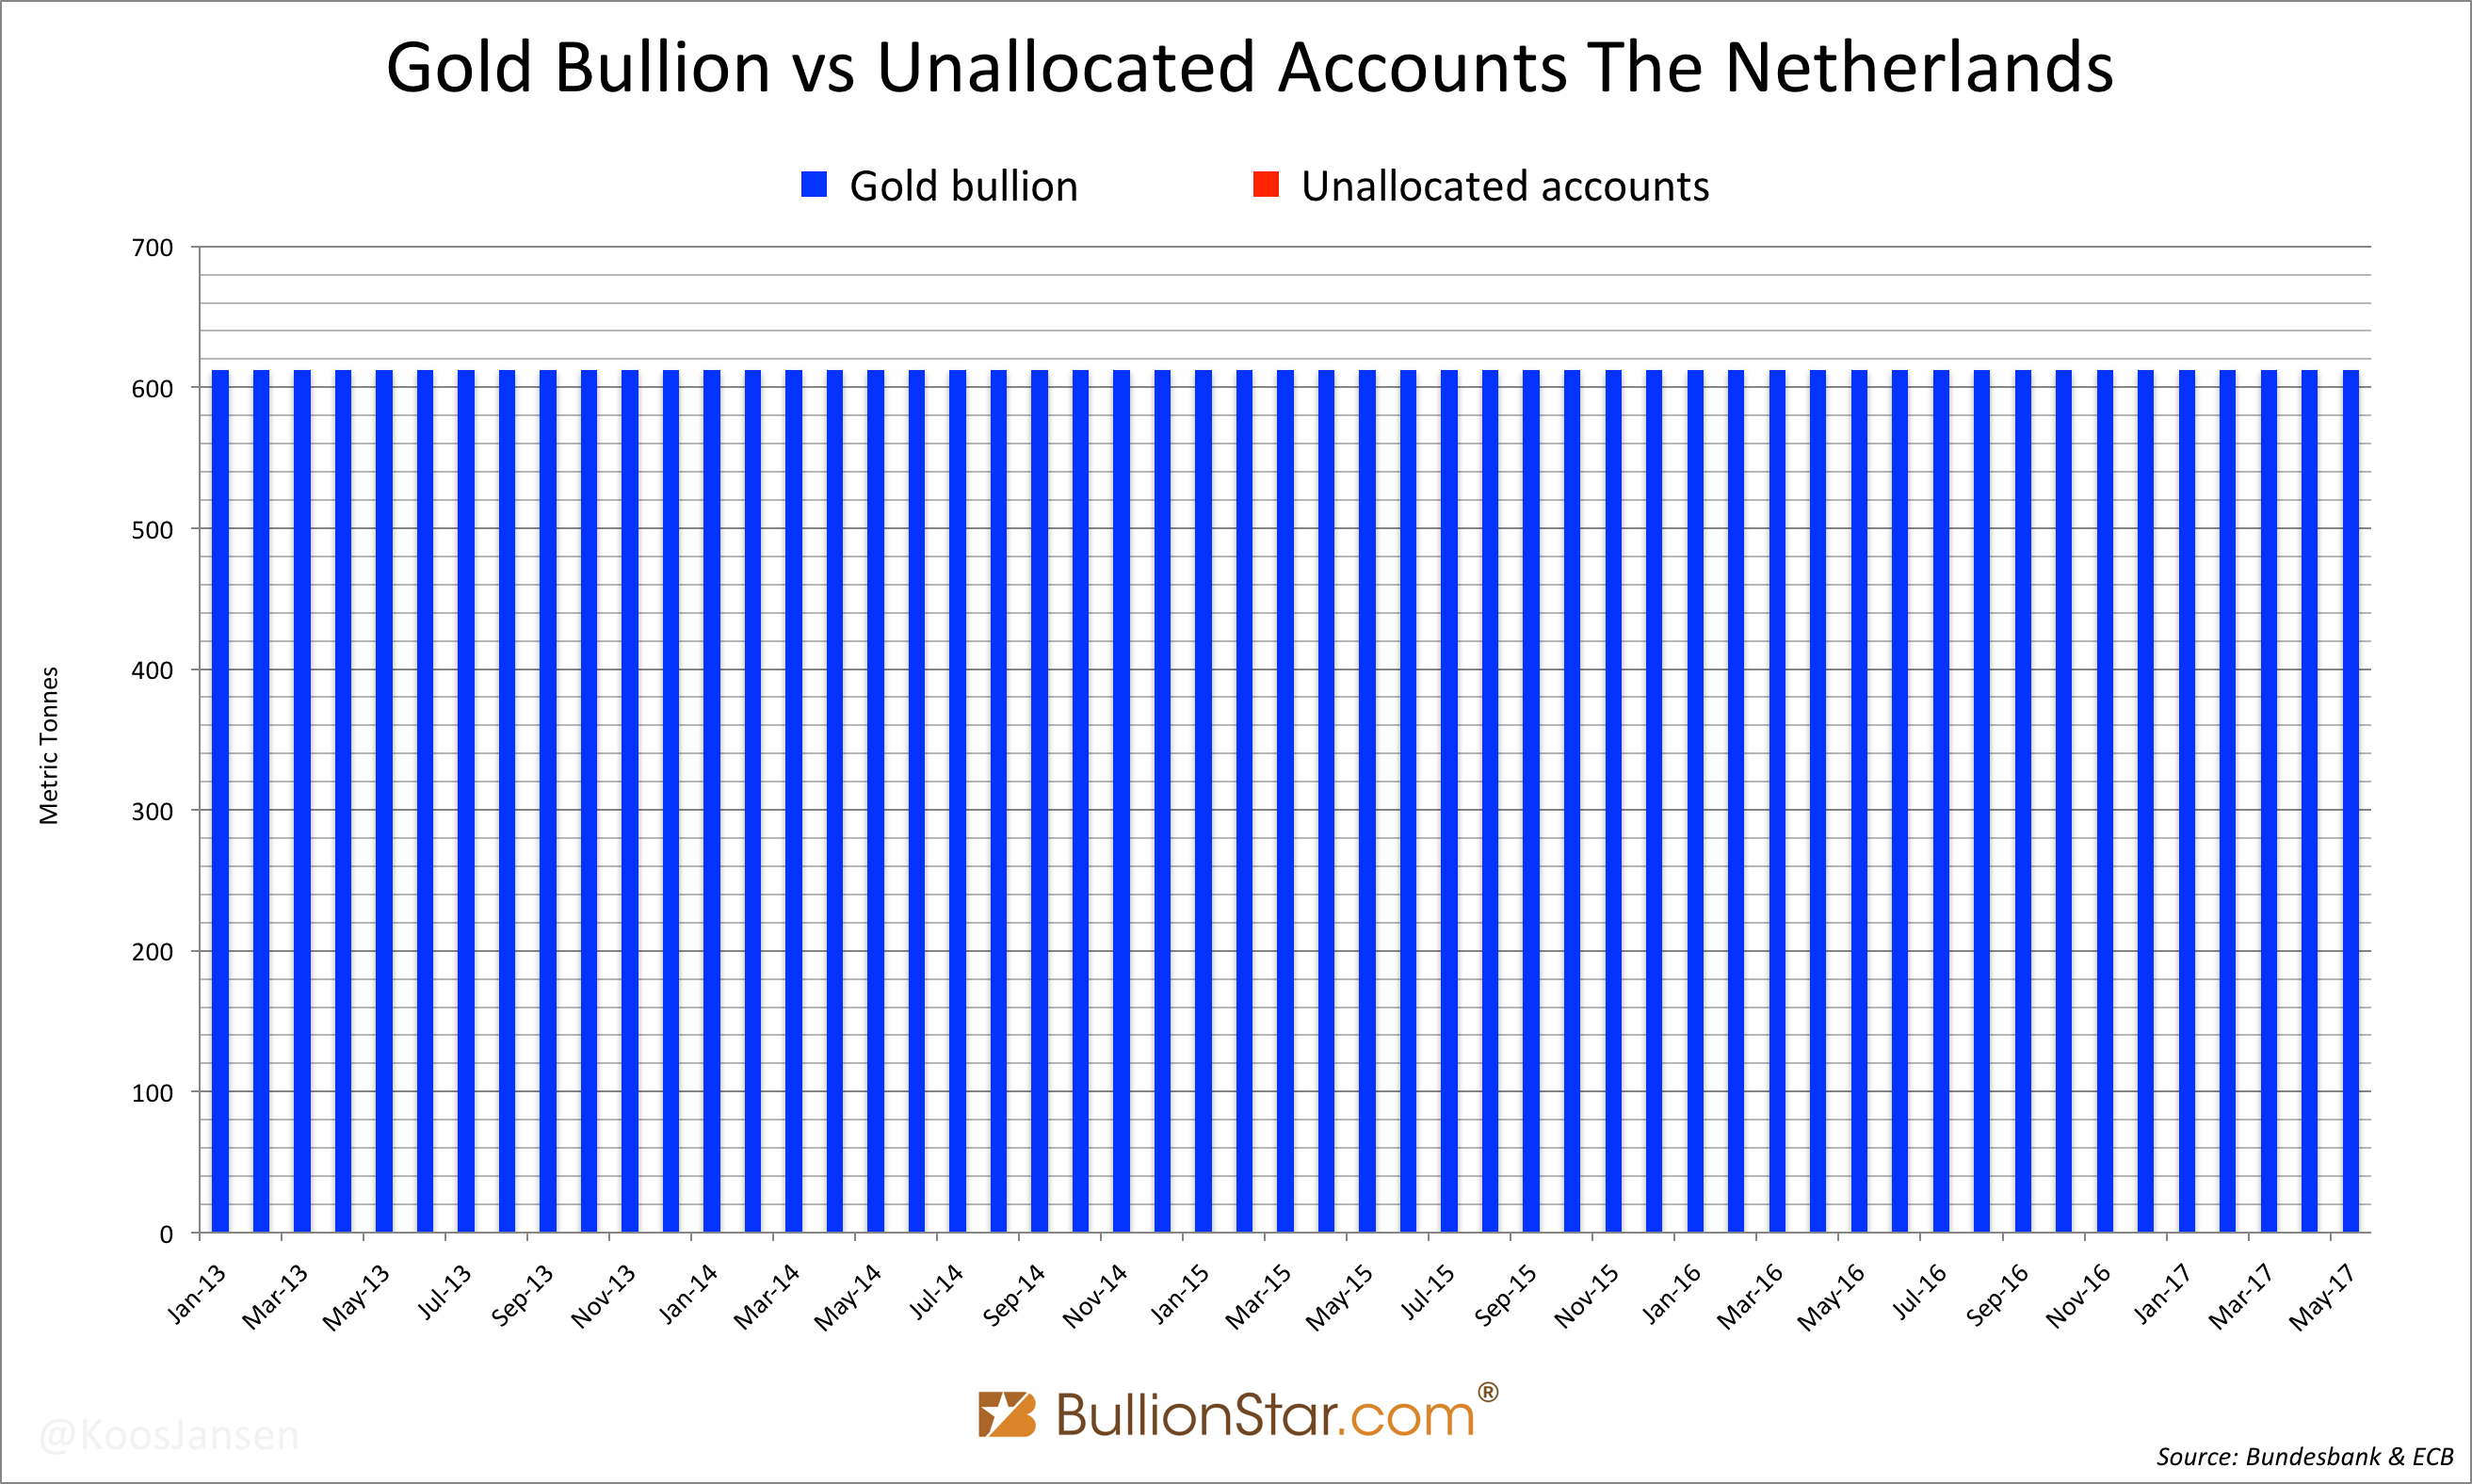 Gold Bullion vs Unallocated Accounts The Netherlands, Jan 2013 - May 2017